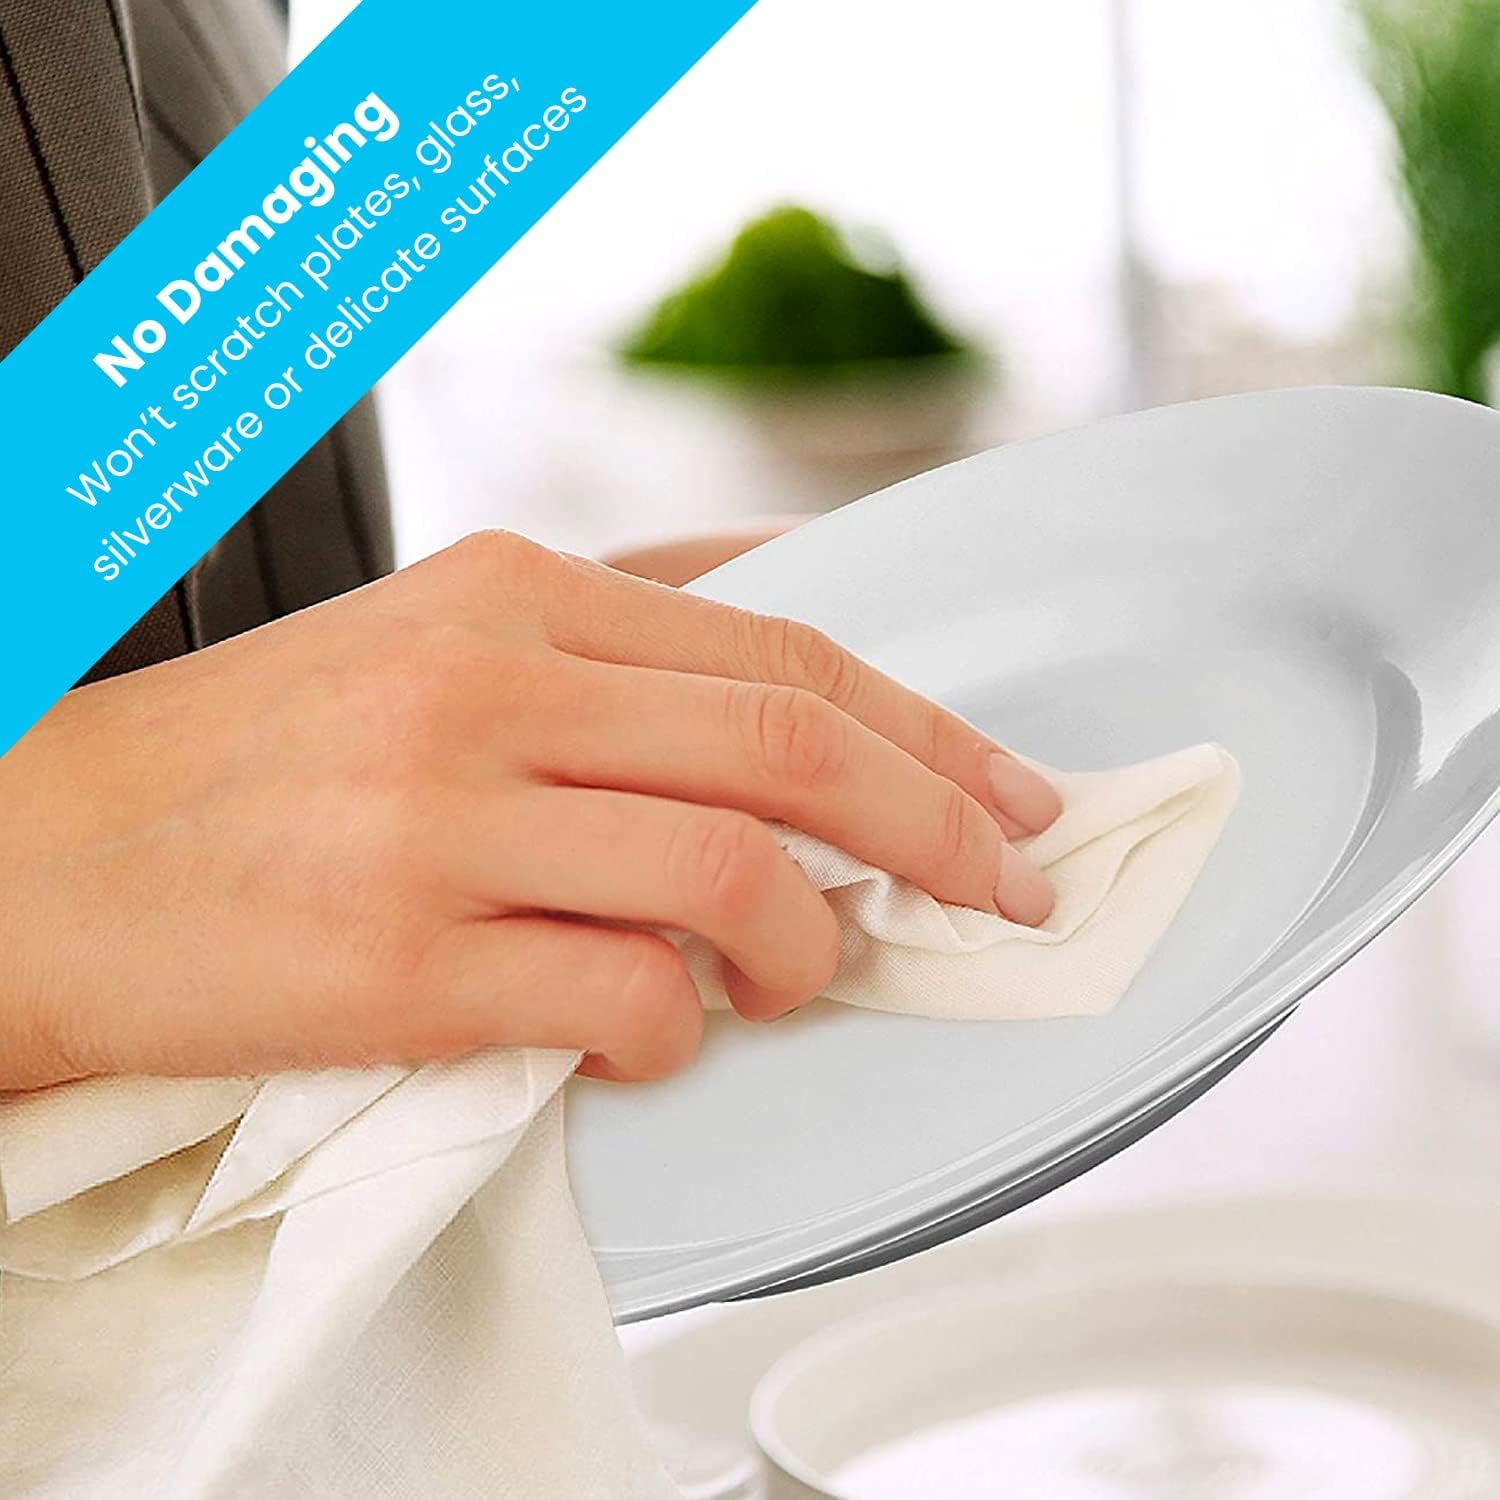 Zeppoli Flour Sack Towel, 28”x28”, Cotton Dish Towels, Drying, 100% Ring-Spun Cotton, White, 12 Pack - image 5 of 8